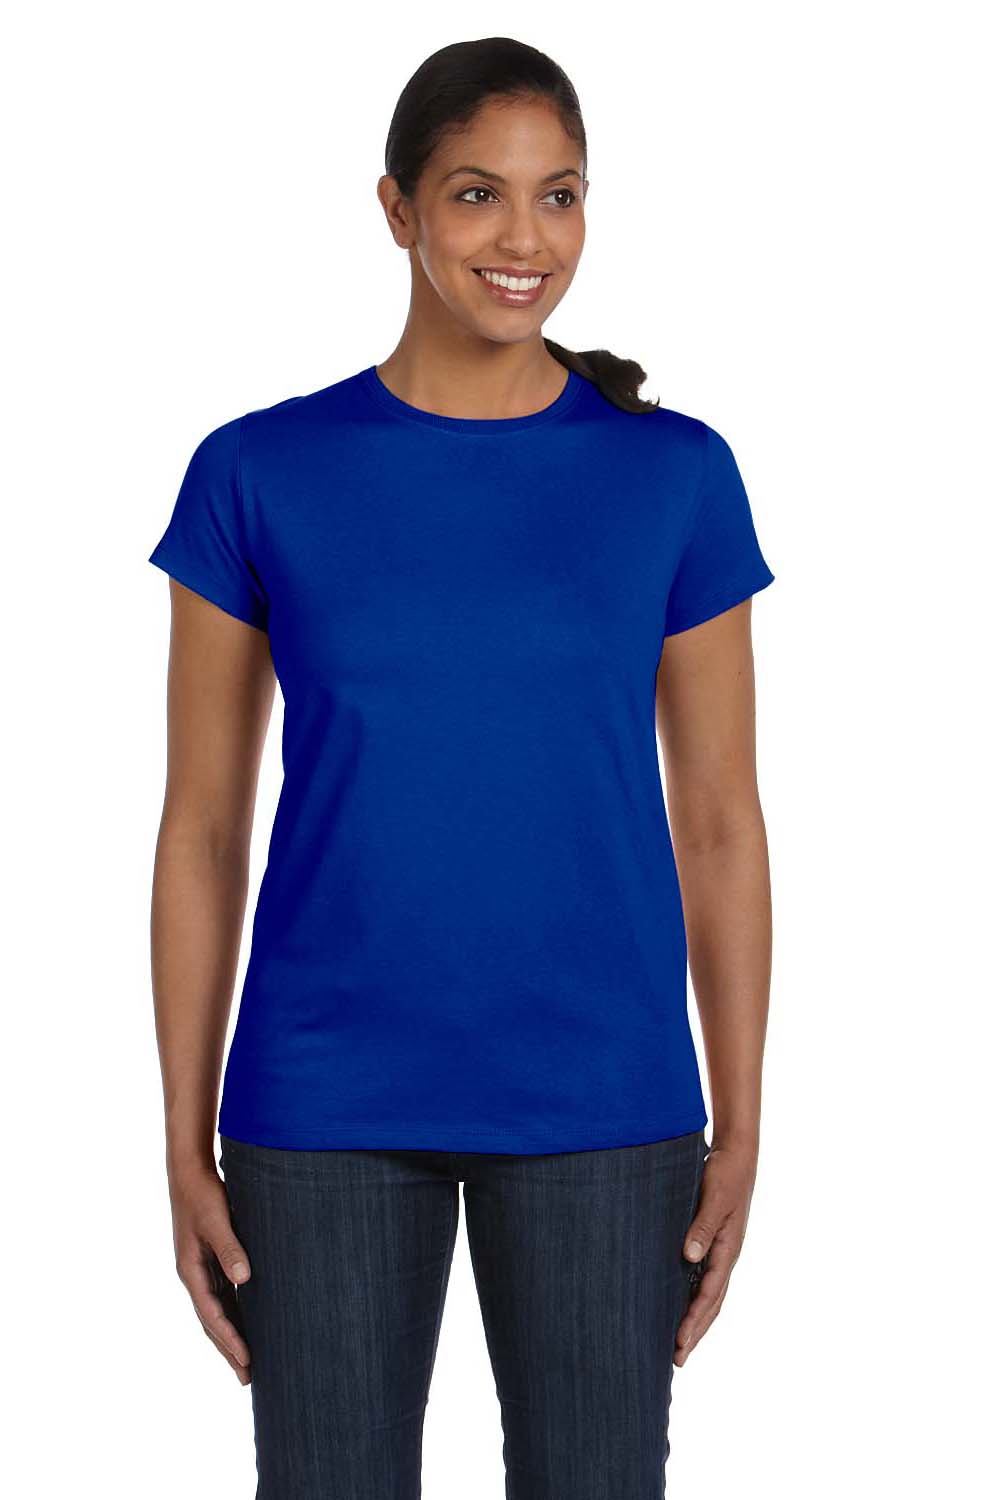 Hanes 5680 Womens ComfortSoft Short Sleeve Crewneck T-Shirt Royal Blue Front